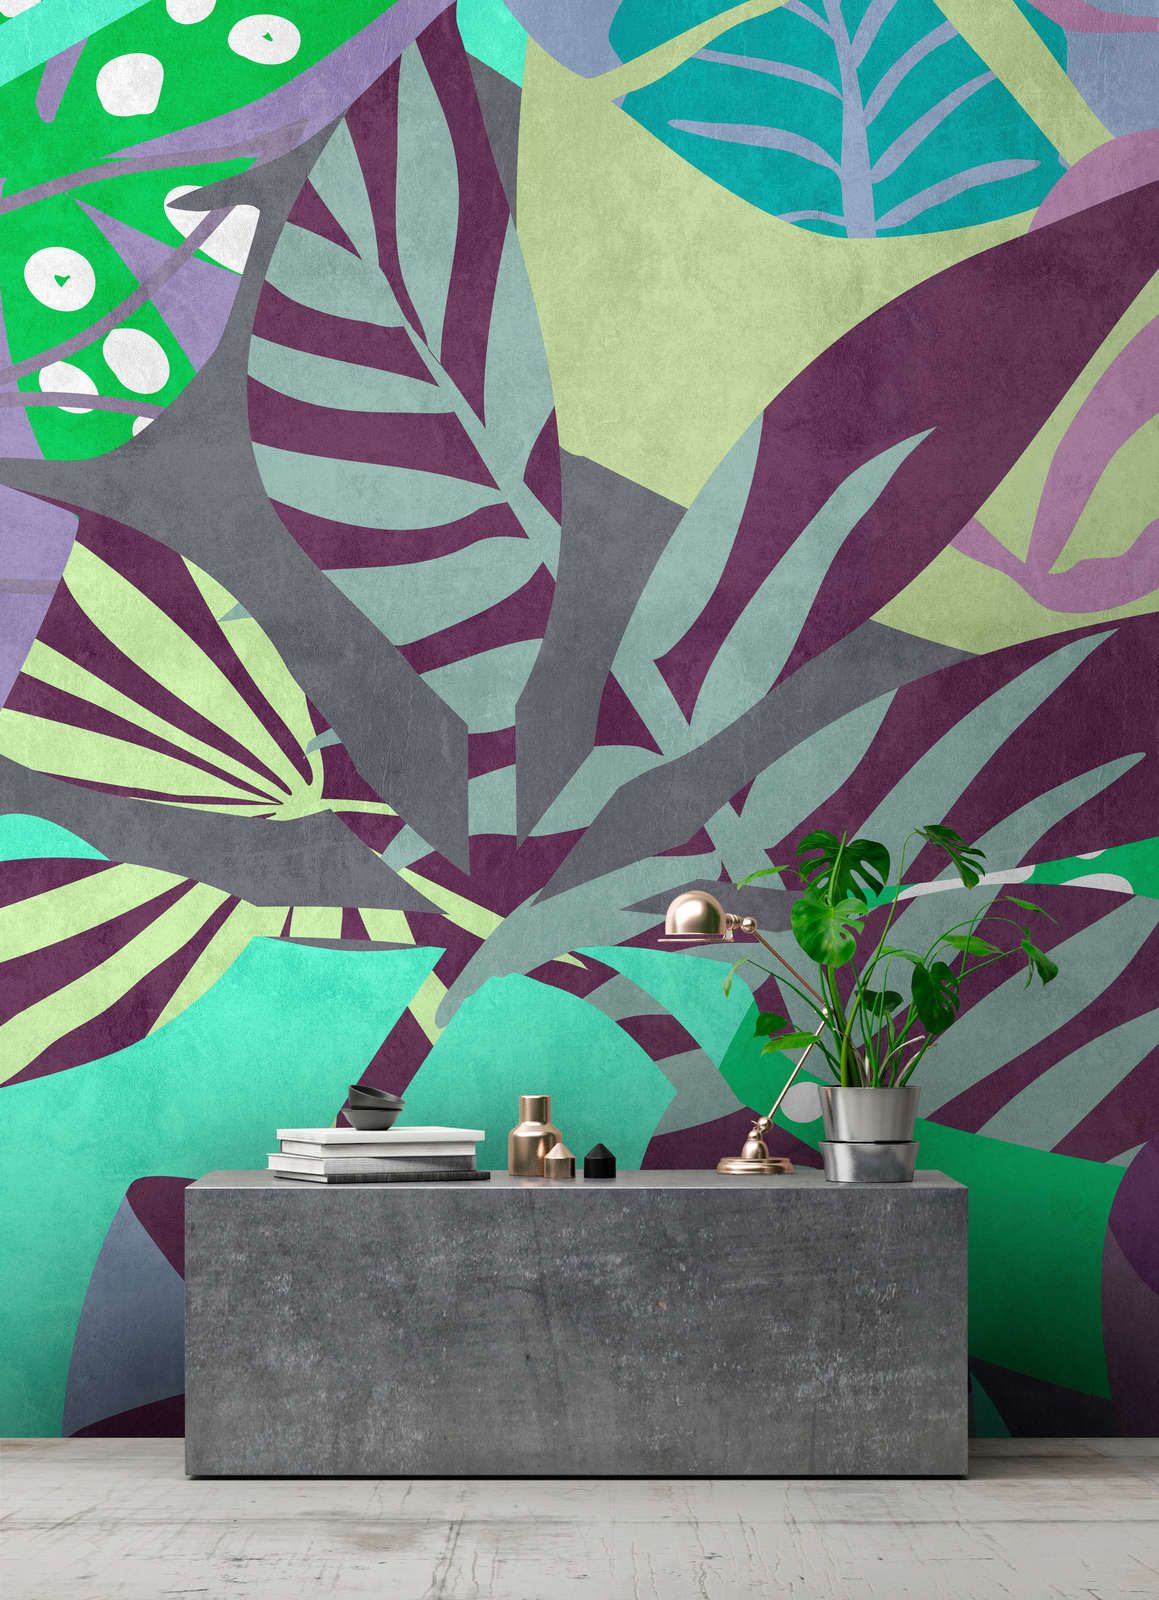             Fotomural »anais 2« - Hojas abstractas sobre textura de yeso hormigón - Violeta, Verde | Mate, Tela no tejida lisa
        